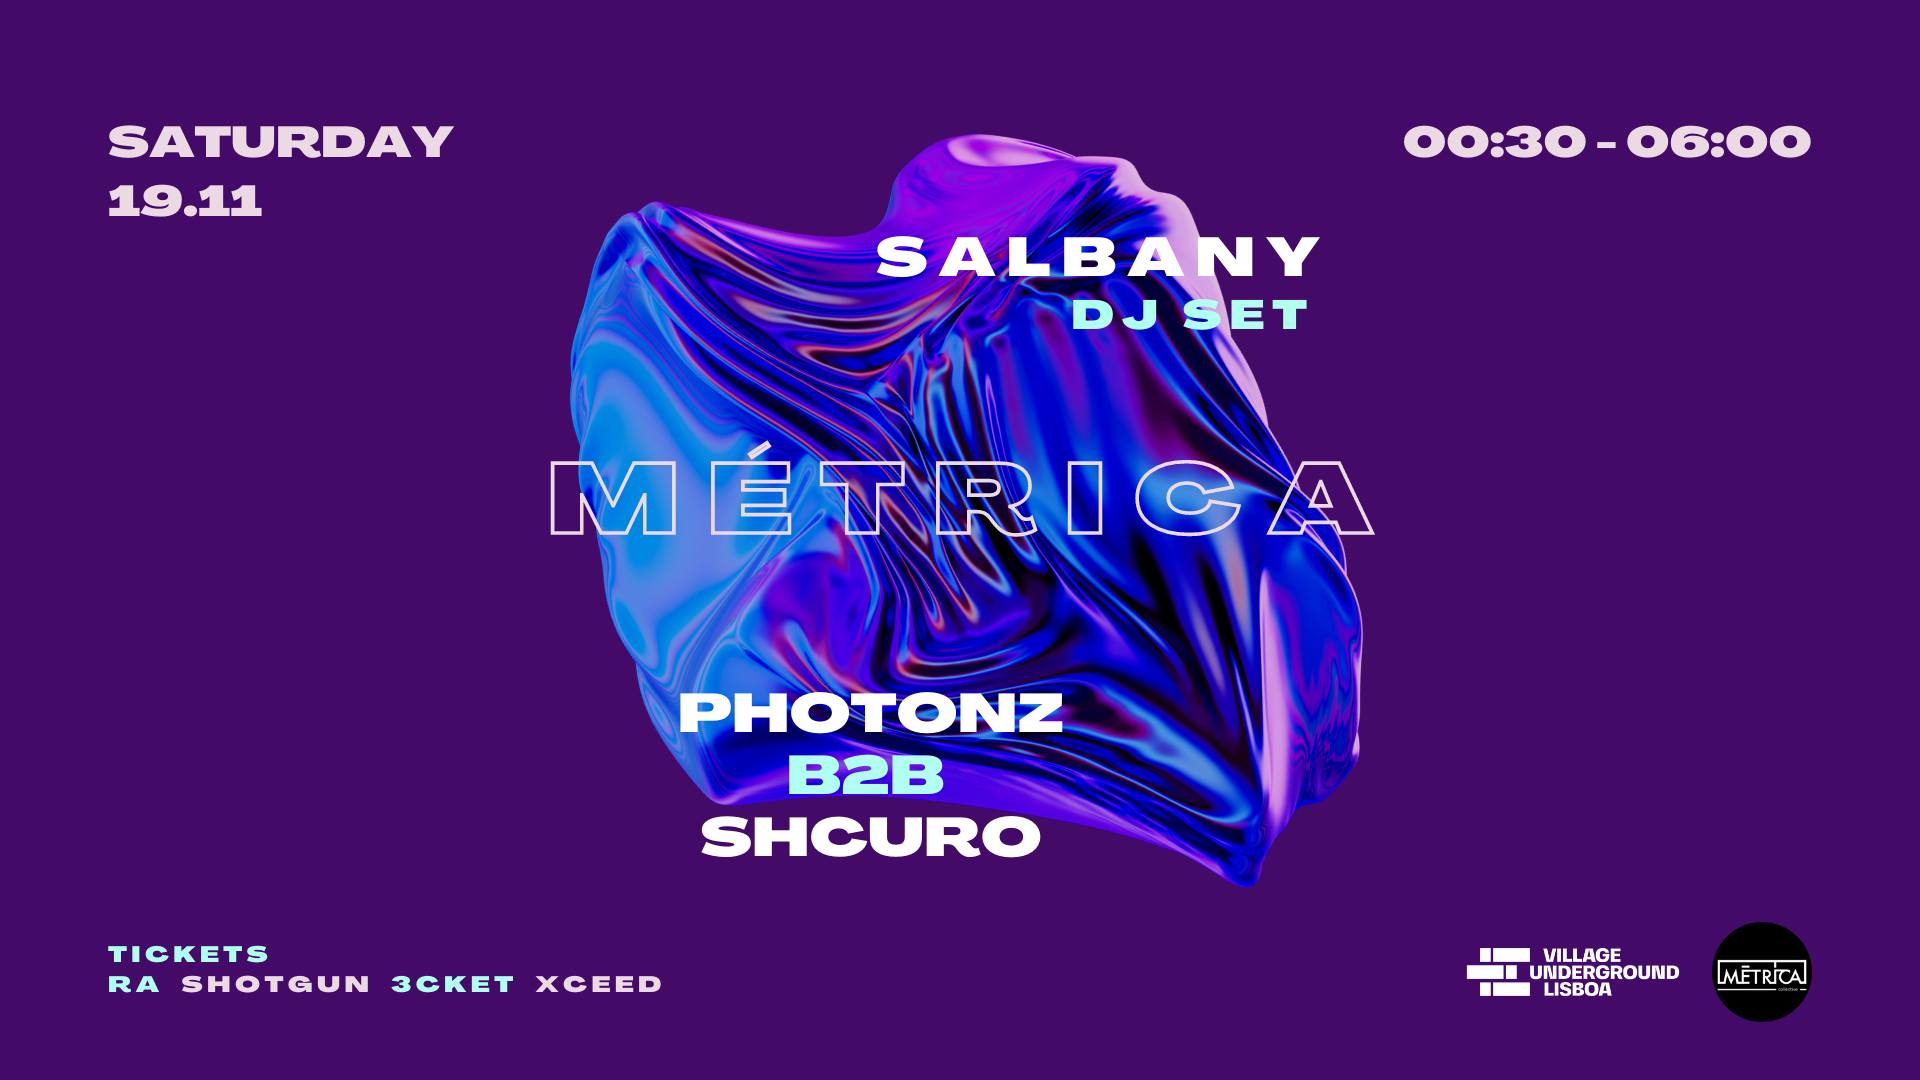 MÉTRICA with Shcuro b2b Photonz x Salbany (DJ set)